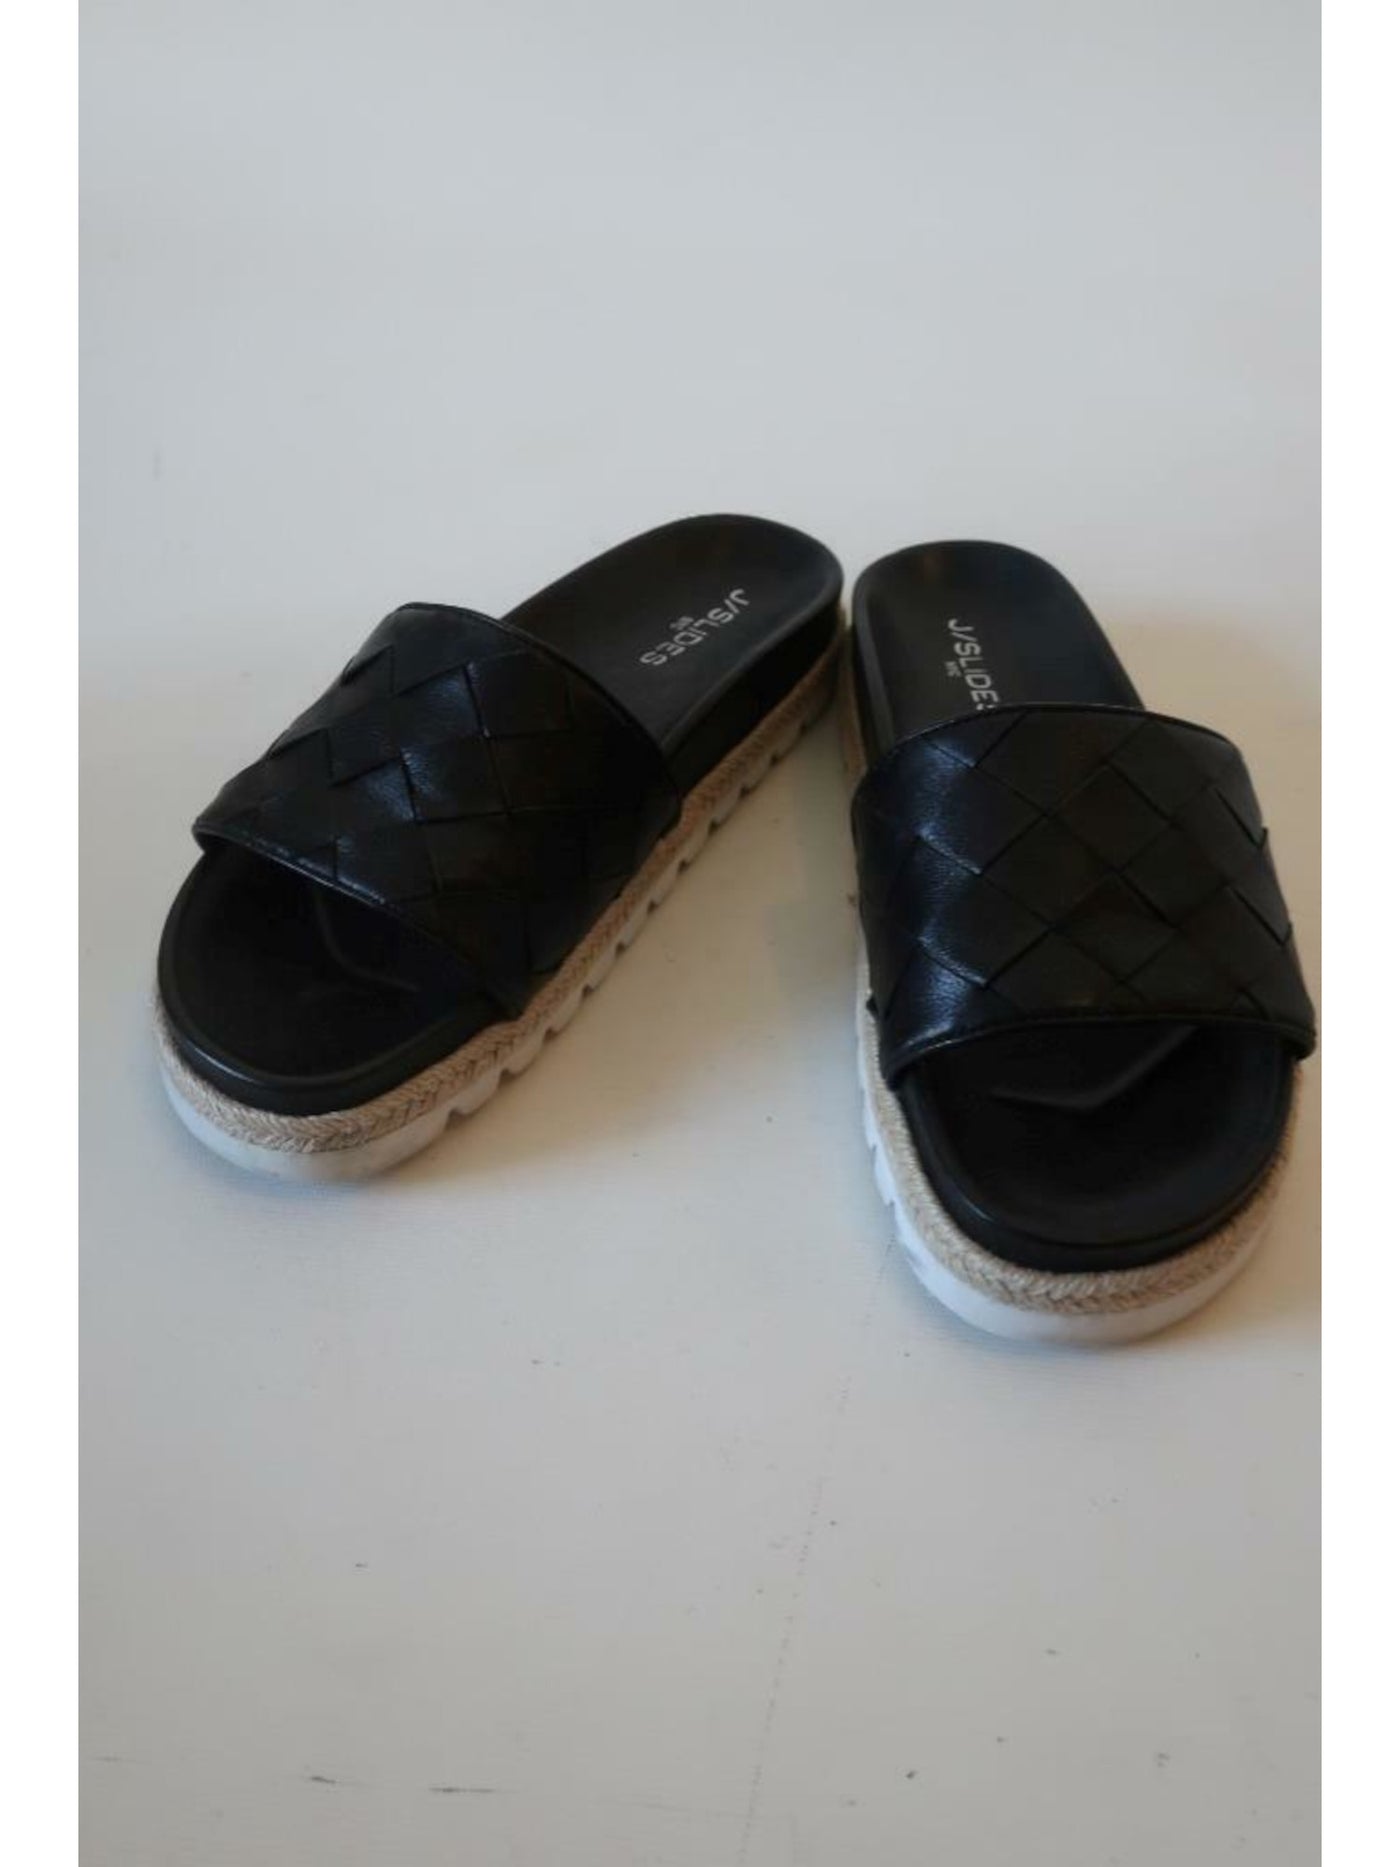 J SLIDES Womens Black Espadrille-Inspired Braiding Woven Padded Rollie Round Toe Slip On Leather Slide Sandals Shoes 10 M